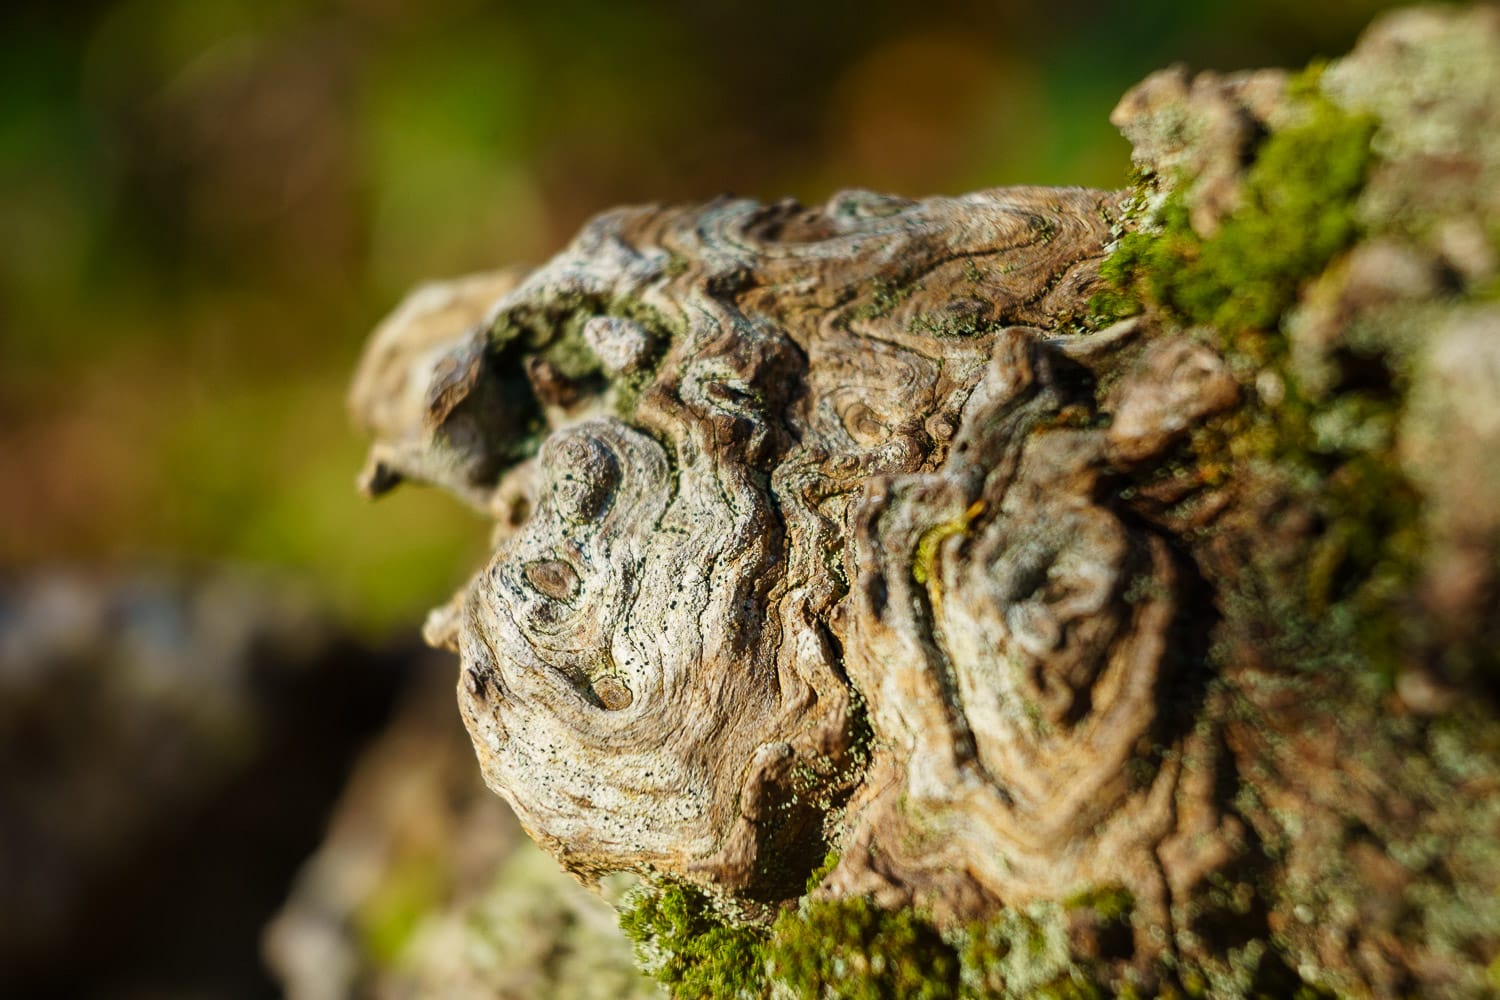 A macro photo of a burl on a stump.